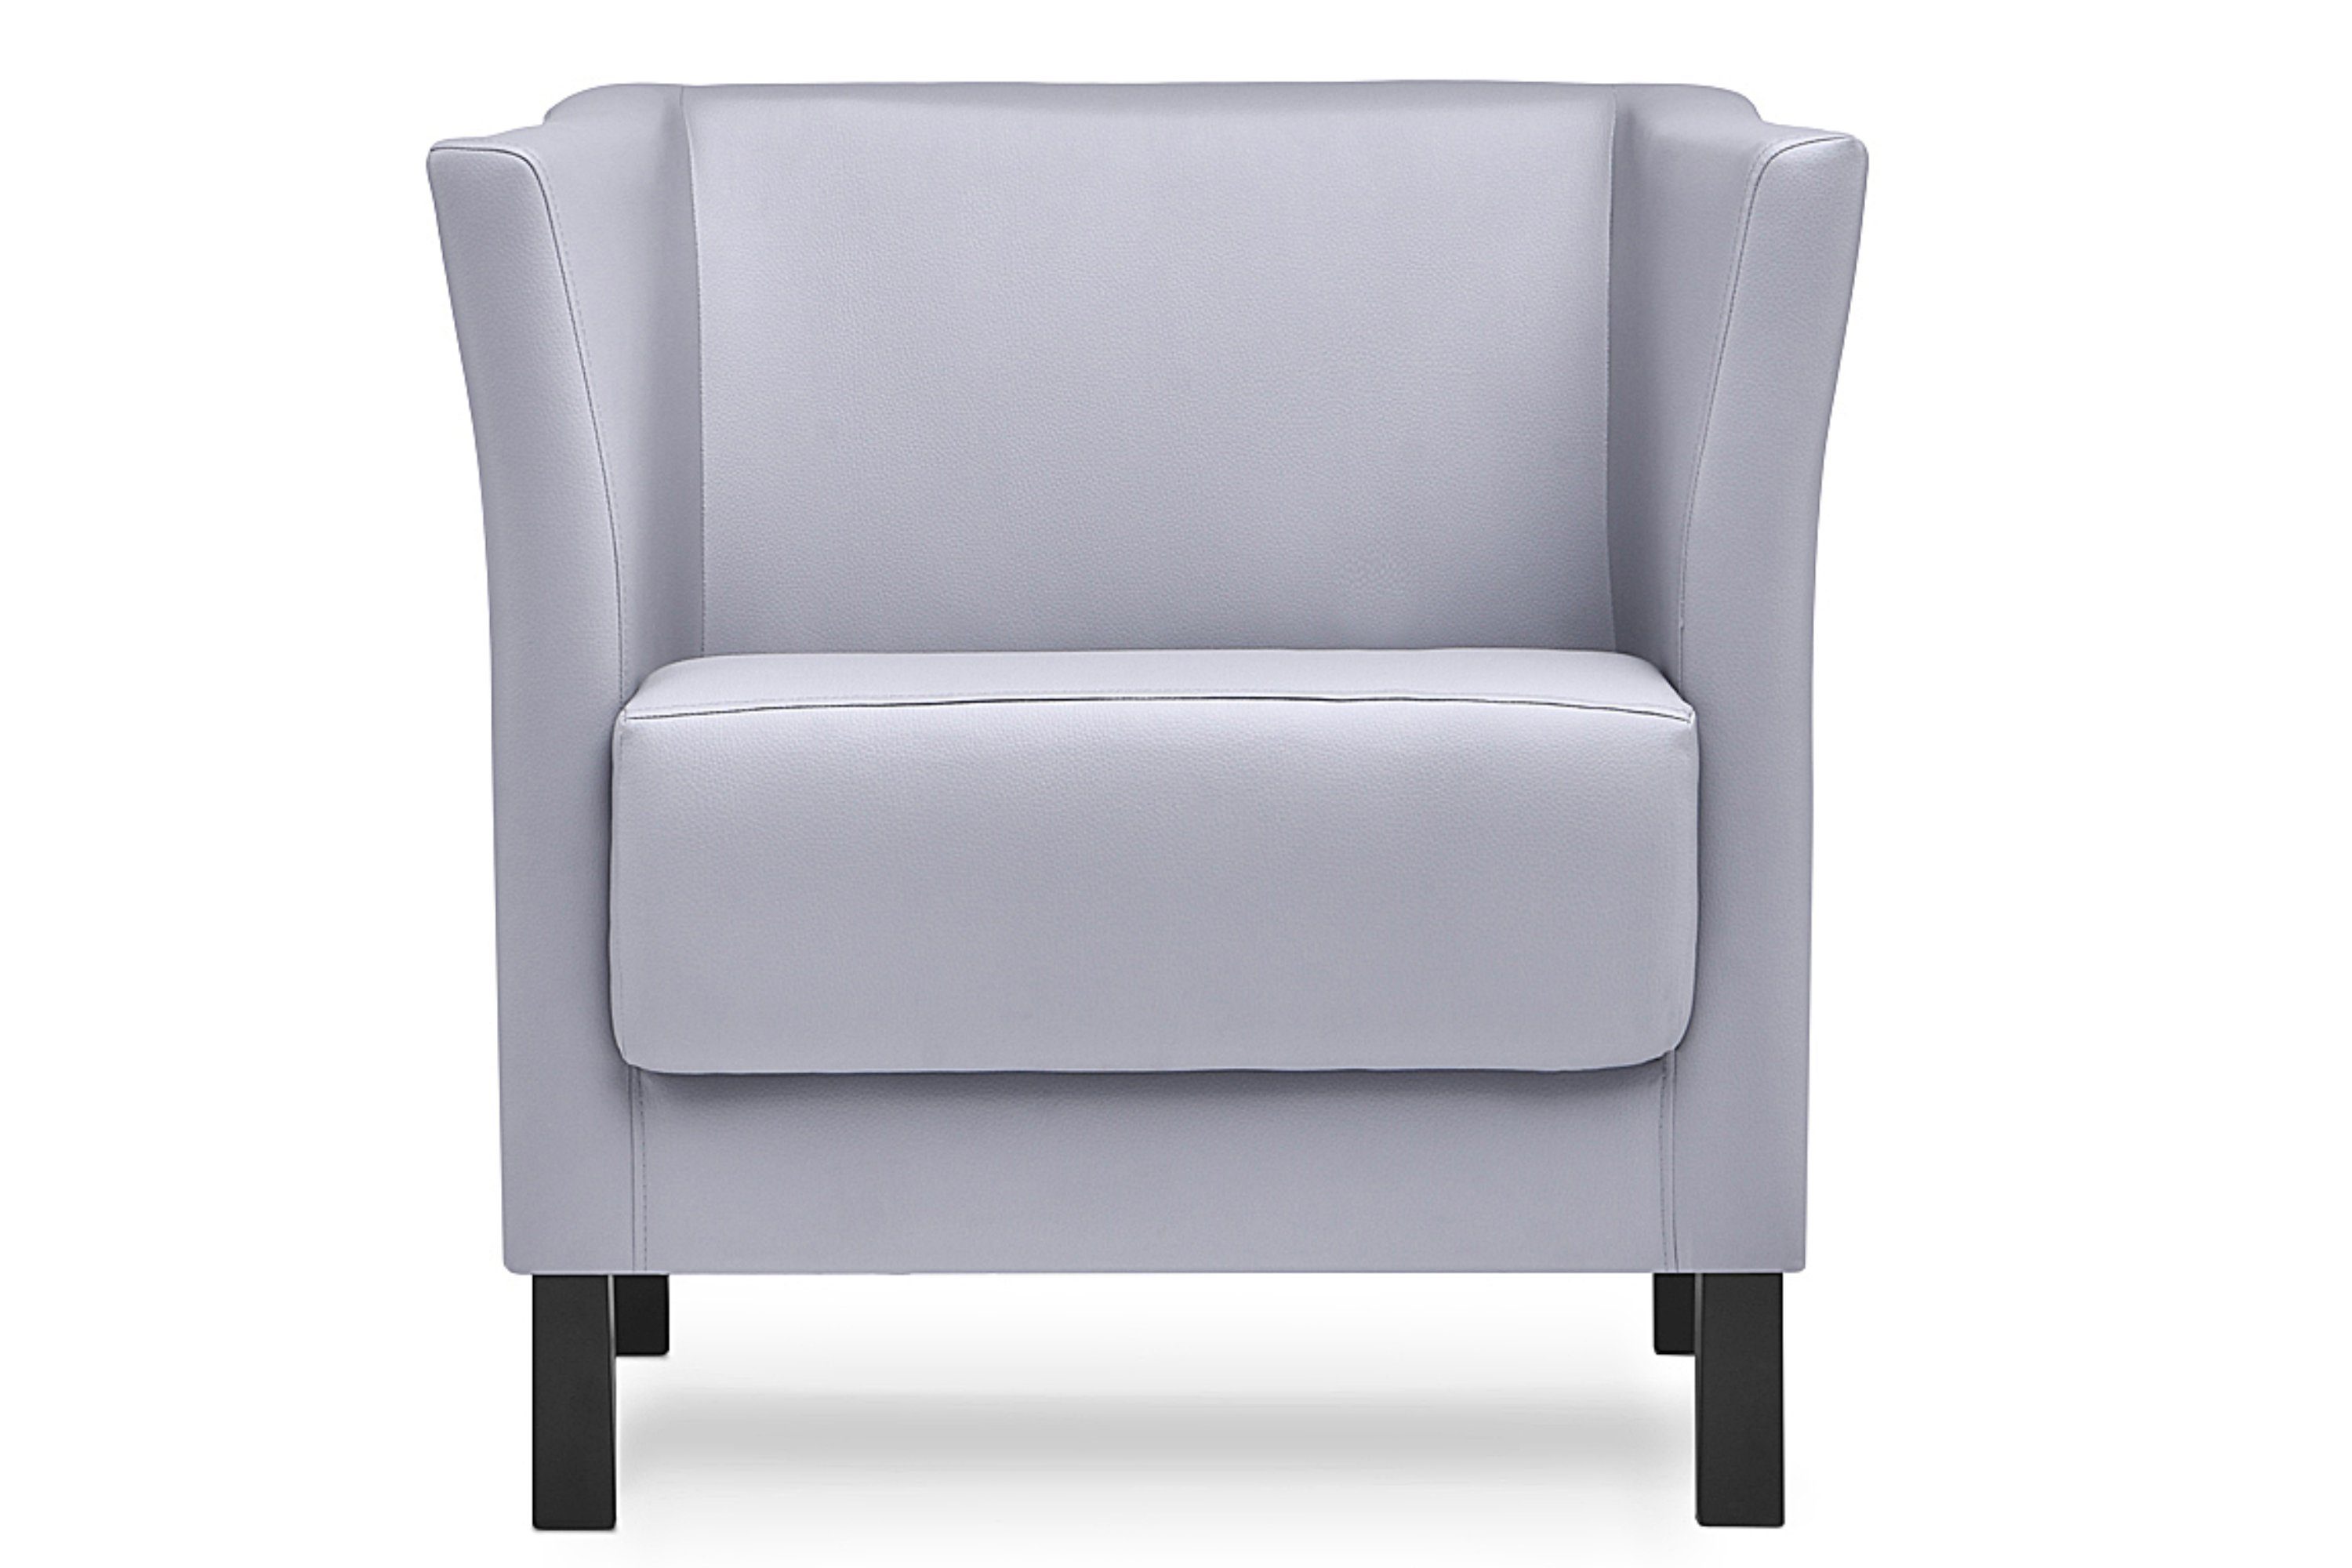 Konsimo Sessel ESPECTO Sessel, hohe weiche grau grau Massivholzbeine, Sitzfläche grau Rückenlehne, hohe | Kunstleder und 